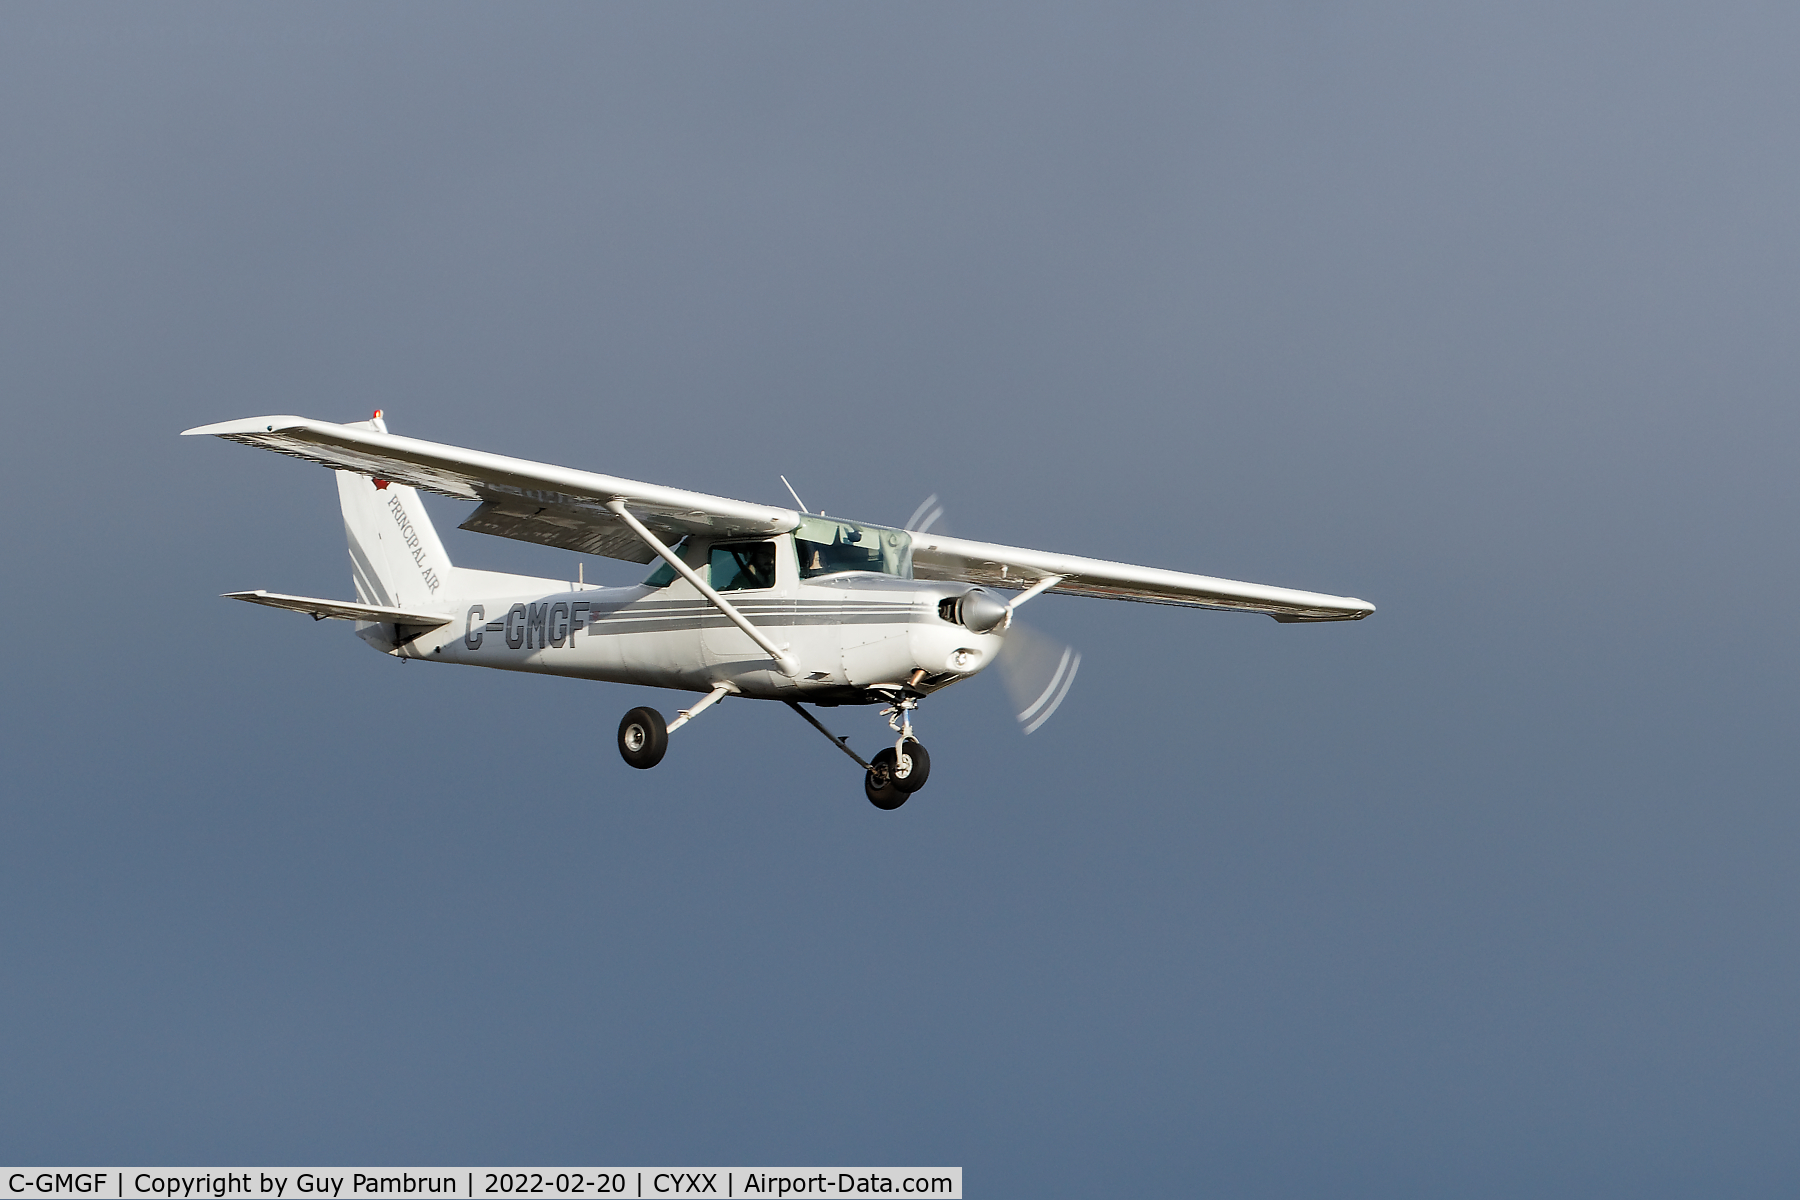 C-GMGF, 1981 Cessna 152 C/N 15285039, Landing on 19